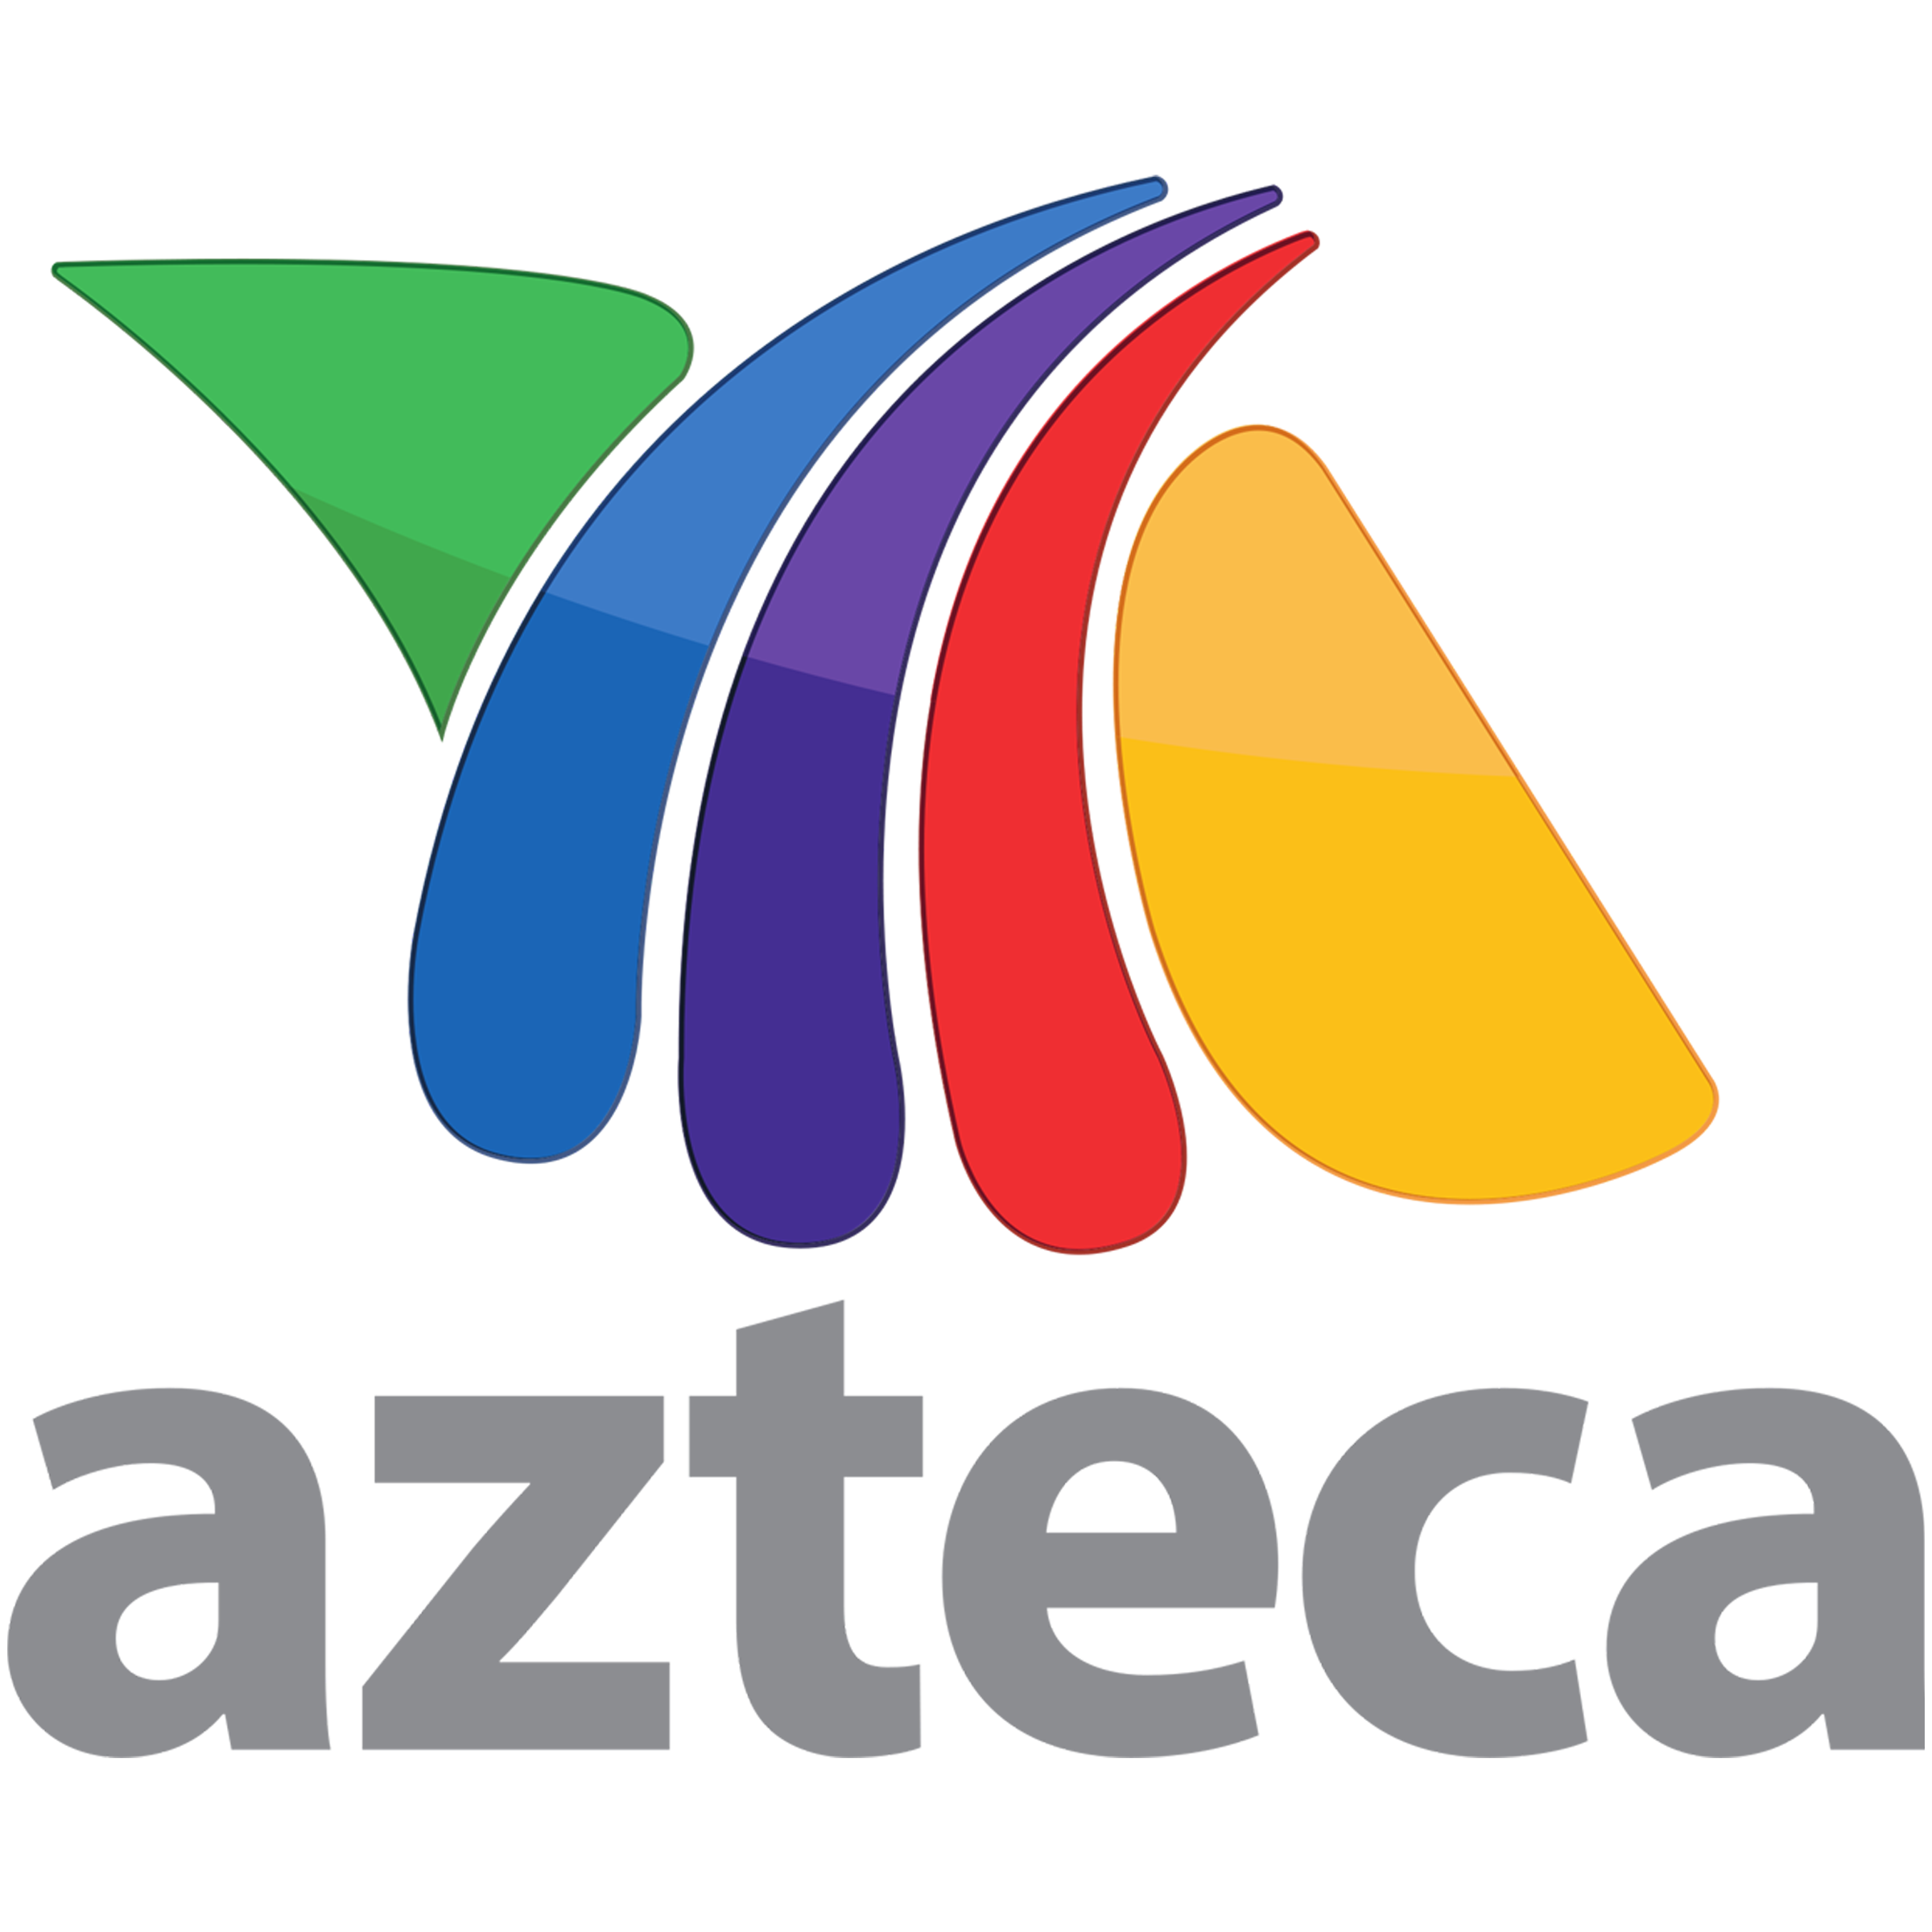 Azteca America Exclusive! Log